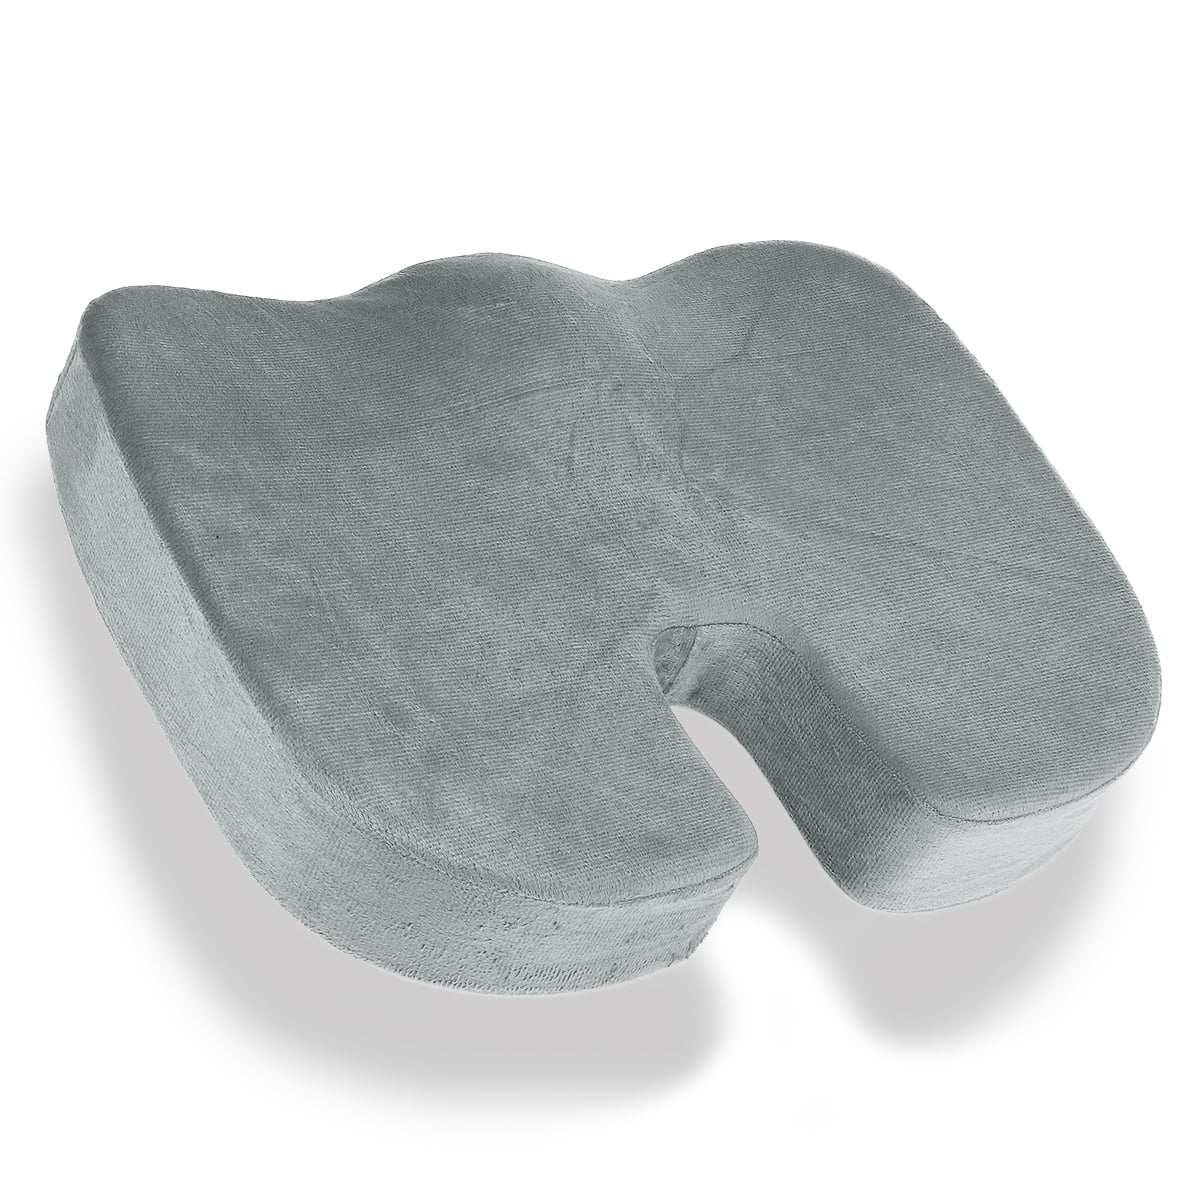 Surobayuusaku Travel Breathable Seat Cushion Coccyx Orthopedic Memory Foam U Seat Massage Chair Cushion Pad Car U-Shape Seat Cushion